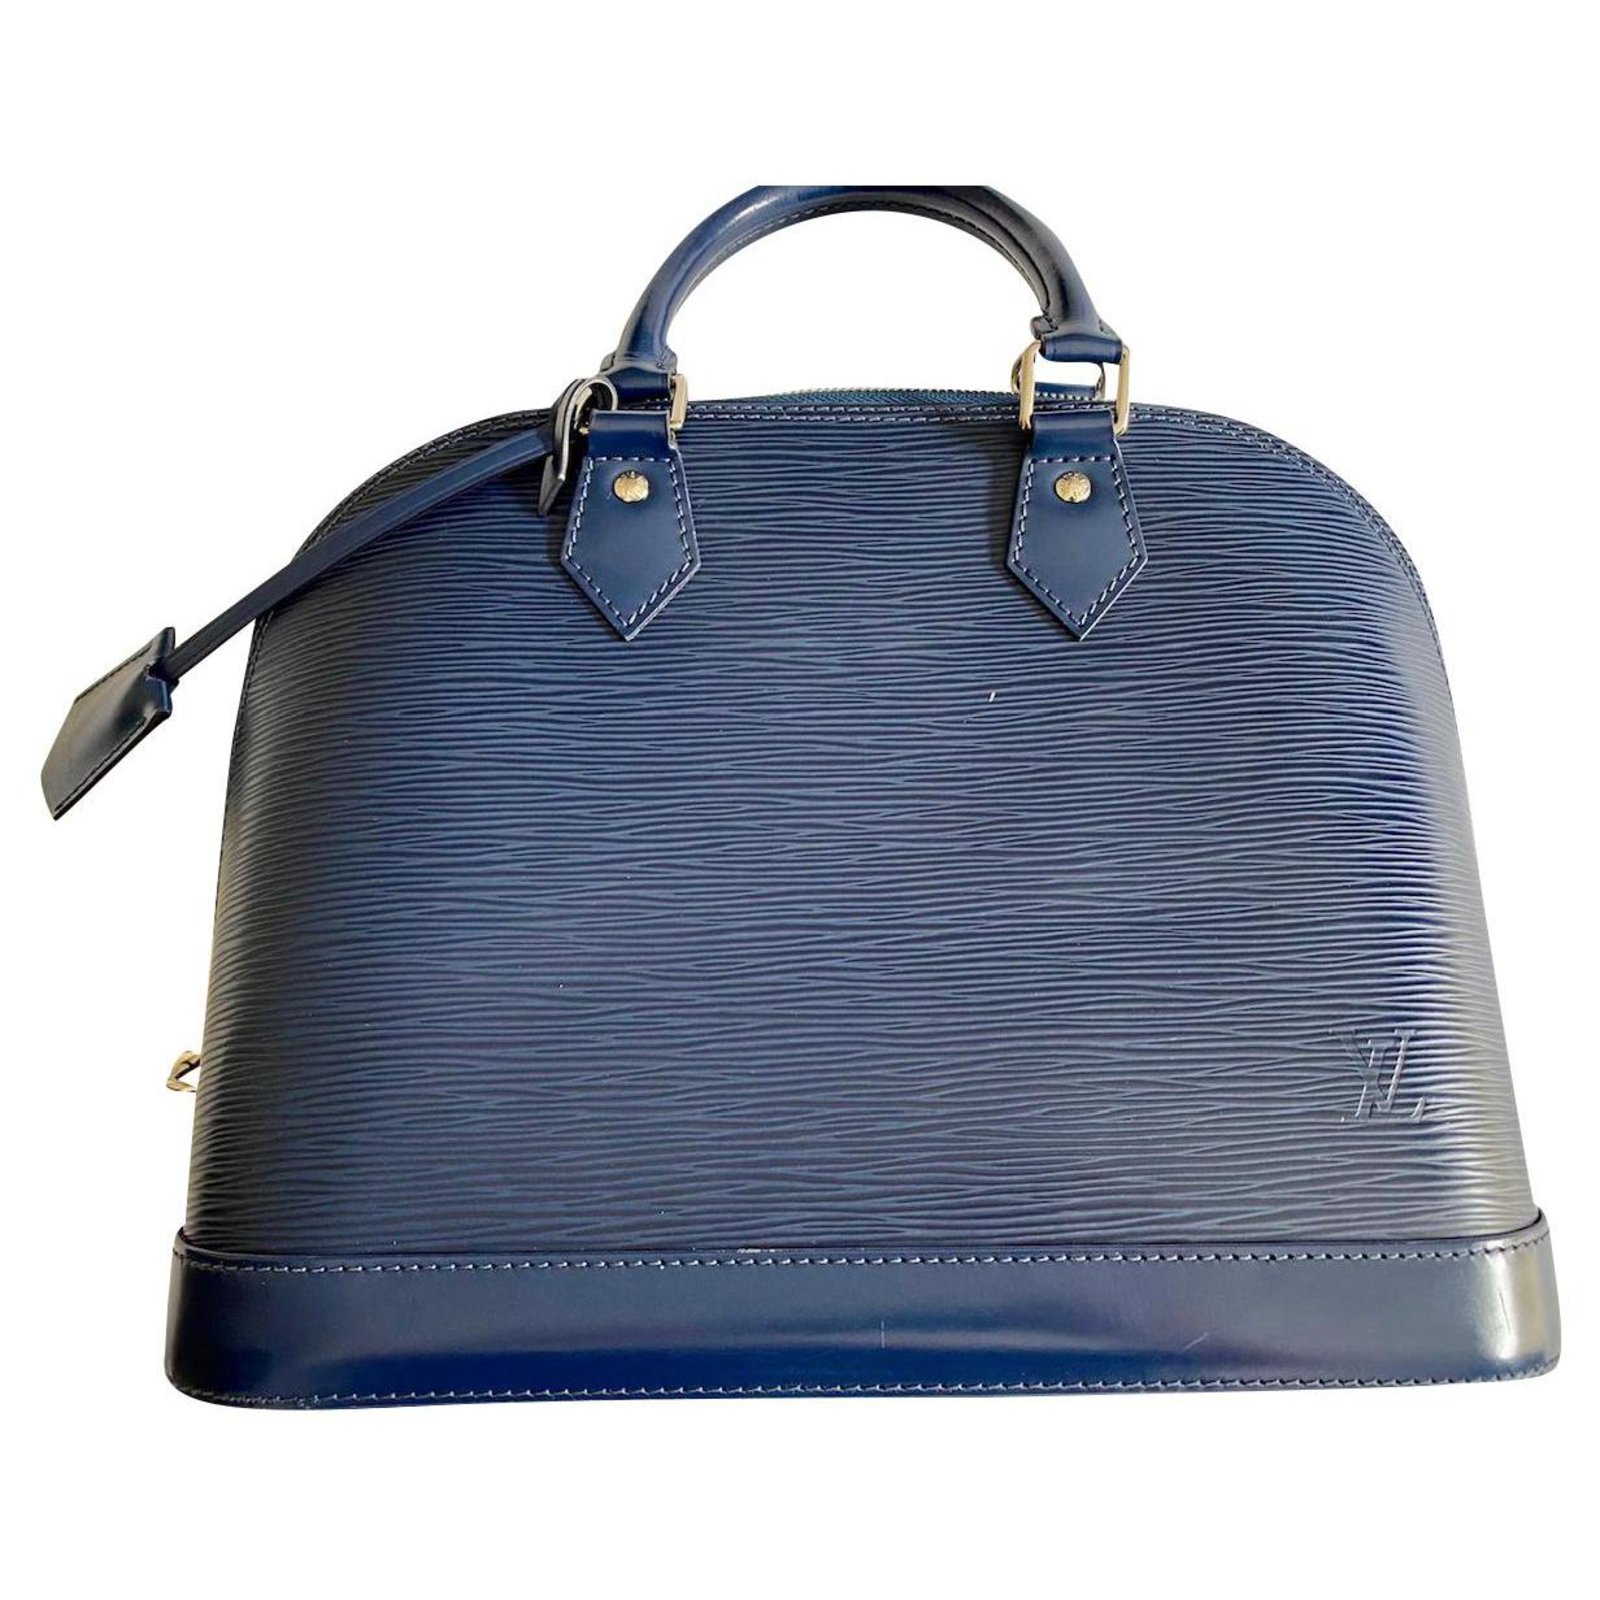 Louis Vuitton IMPECCABLE ALMA MARINE VUITON BAG Navy blue Leather